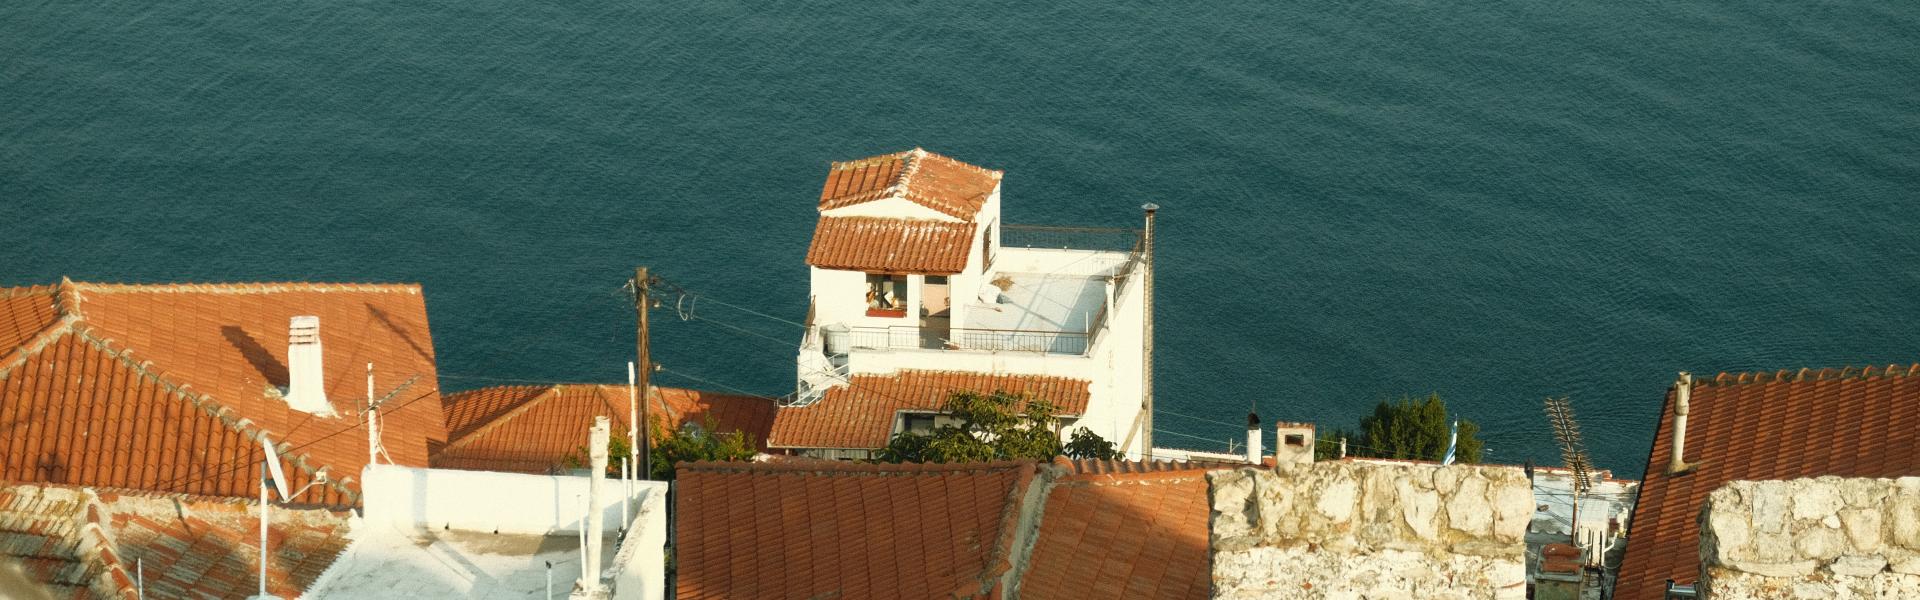 Location appartements de vacances entre particuliers Antibes - amivac